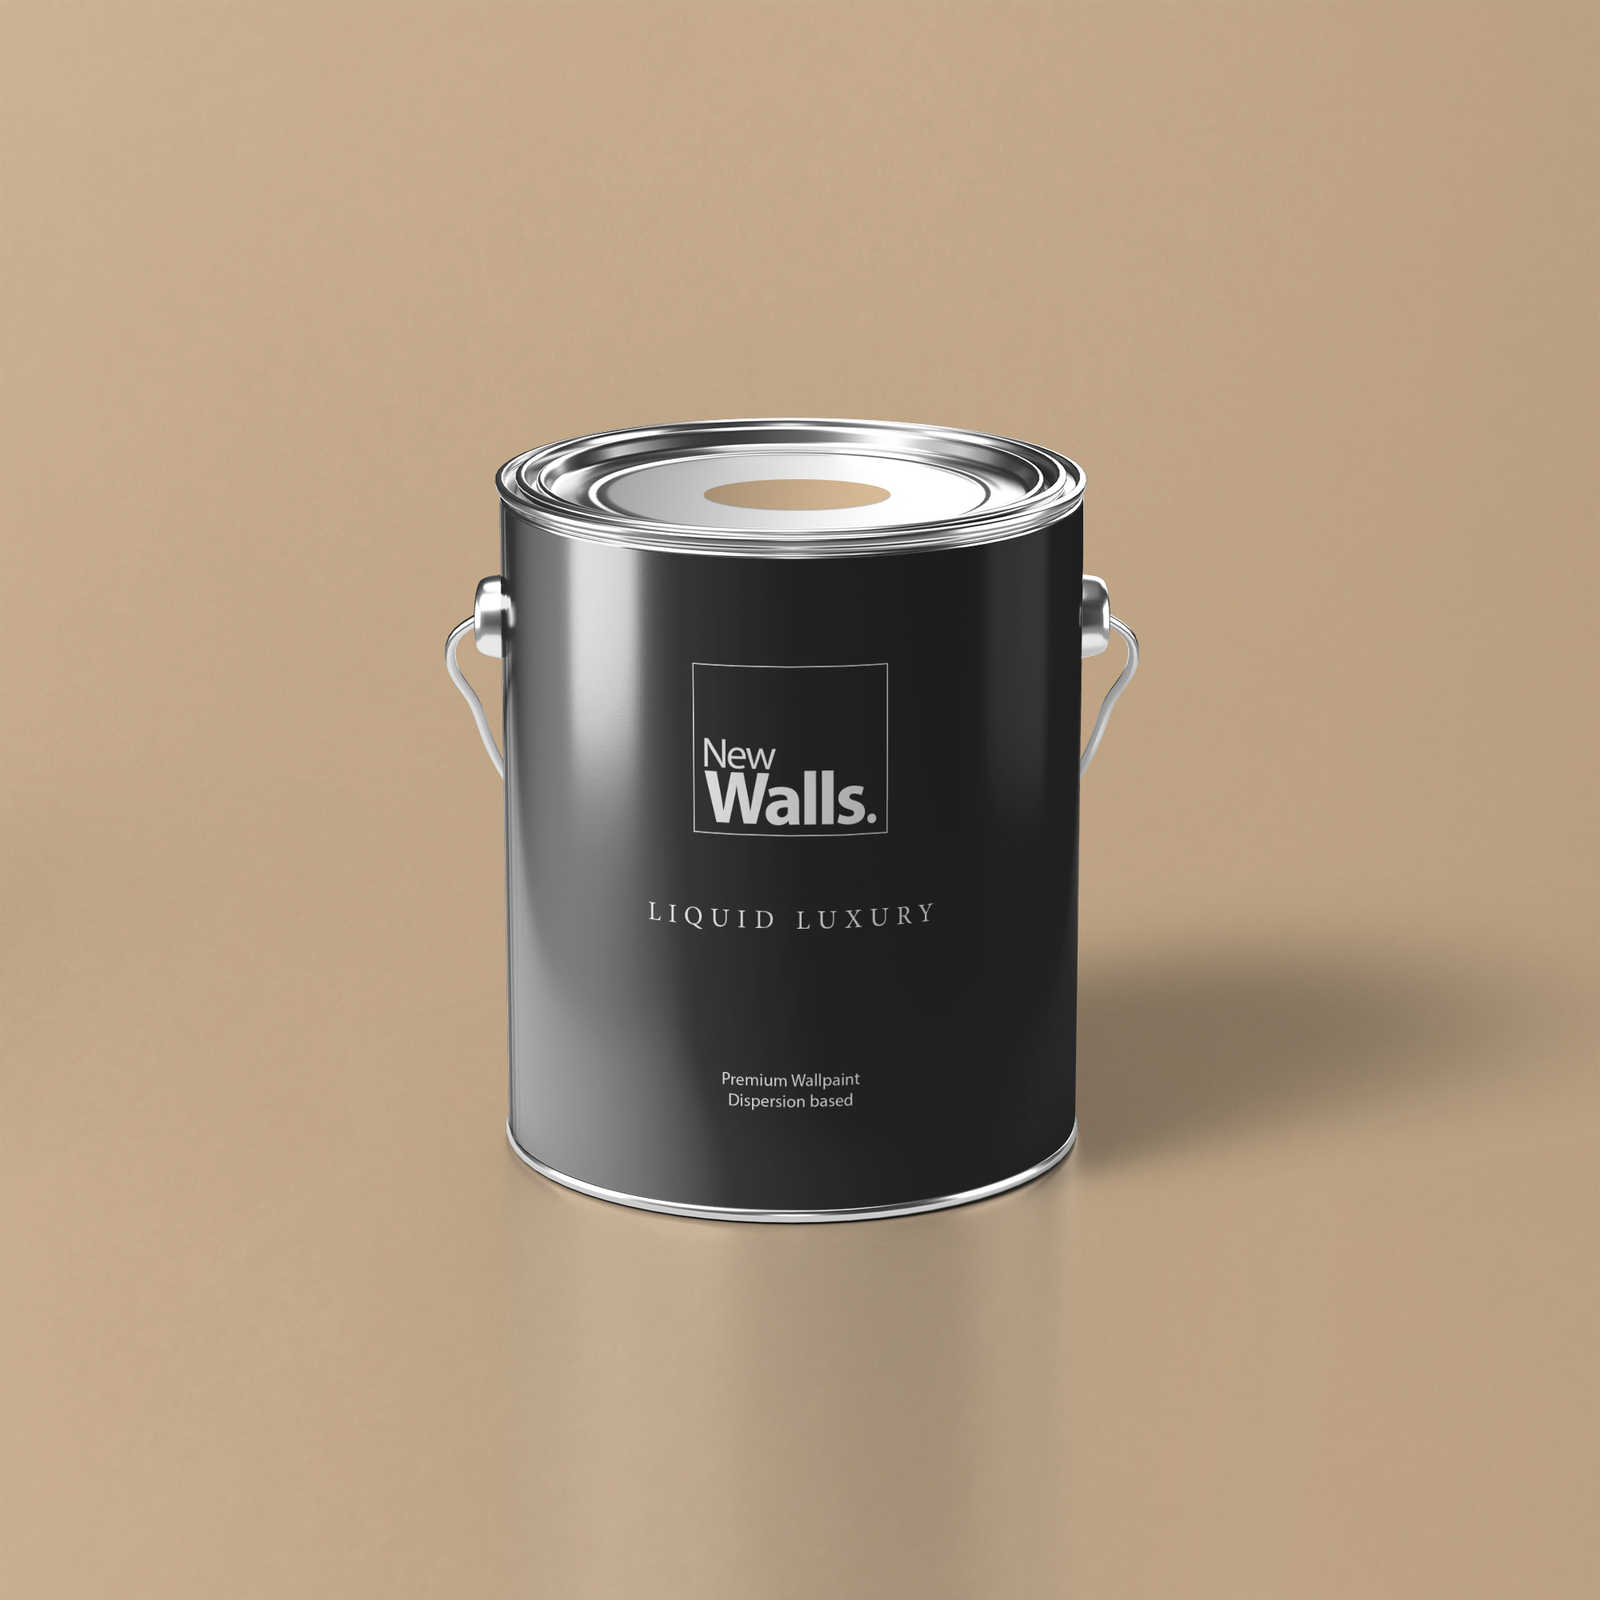 Premium Wall Paint serene cappuccino »Boho Beige« NW725 – 5 litre
